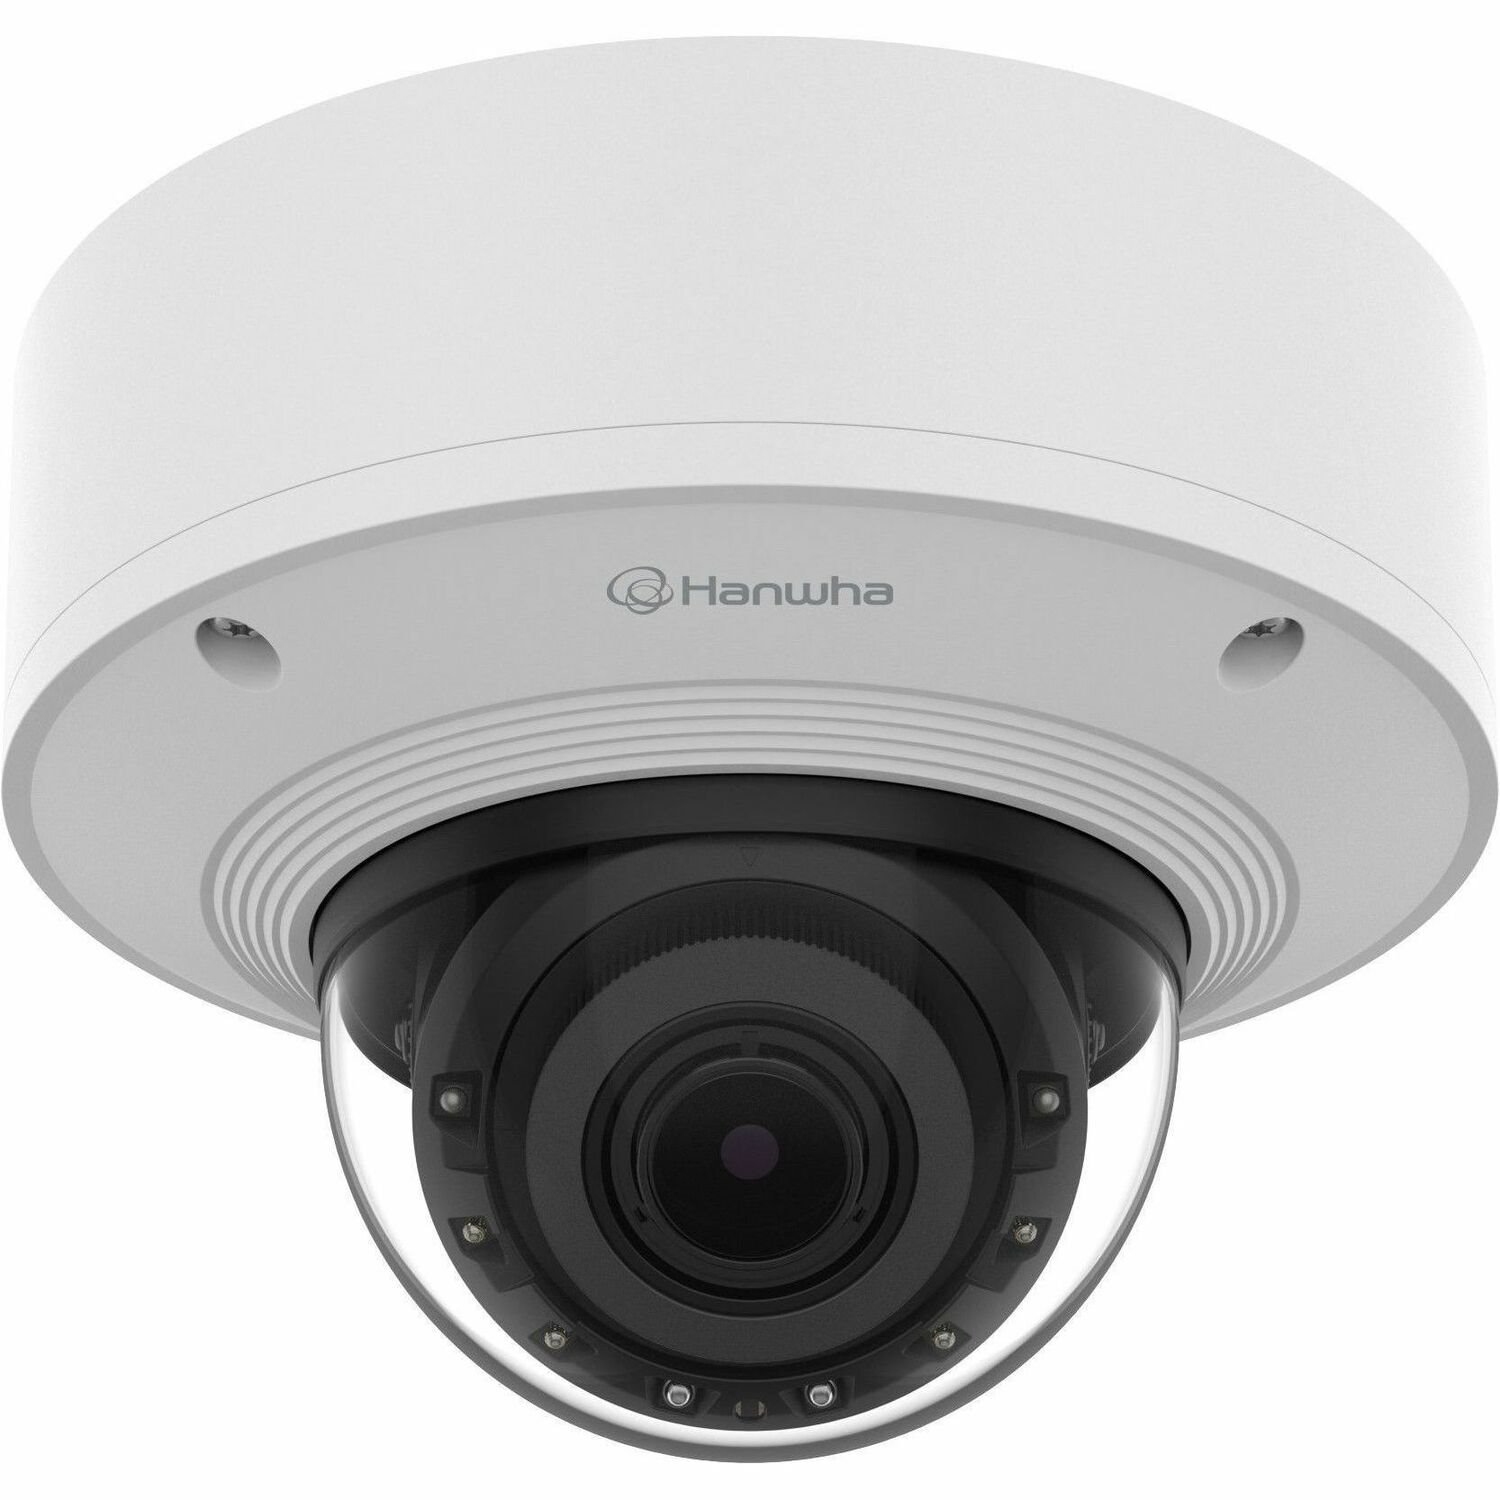 Hanwha PNV-A6081R-E1T 2 Megapixel Outdoor Full HD Network Camera - Colour - Dome - White